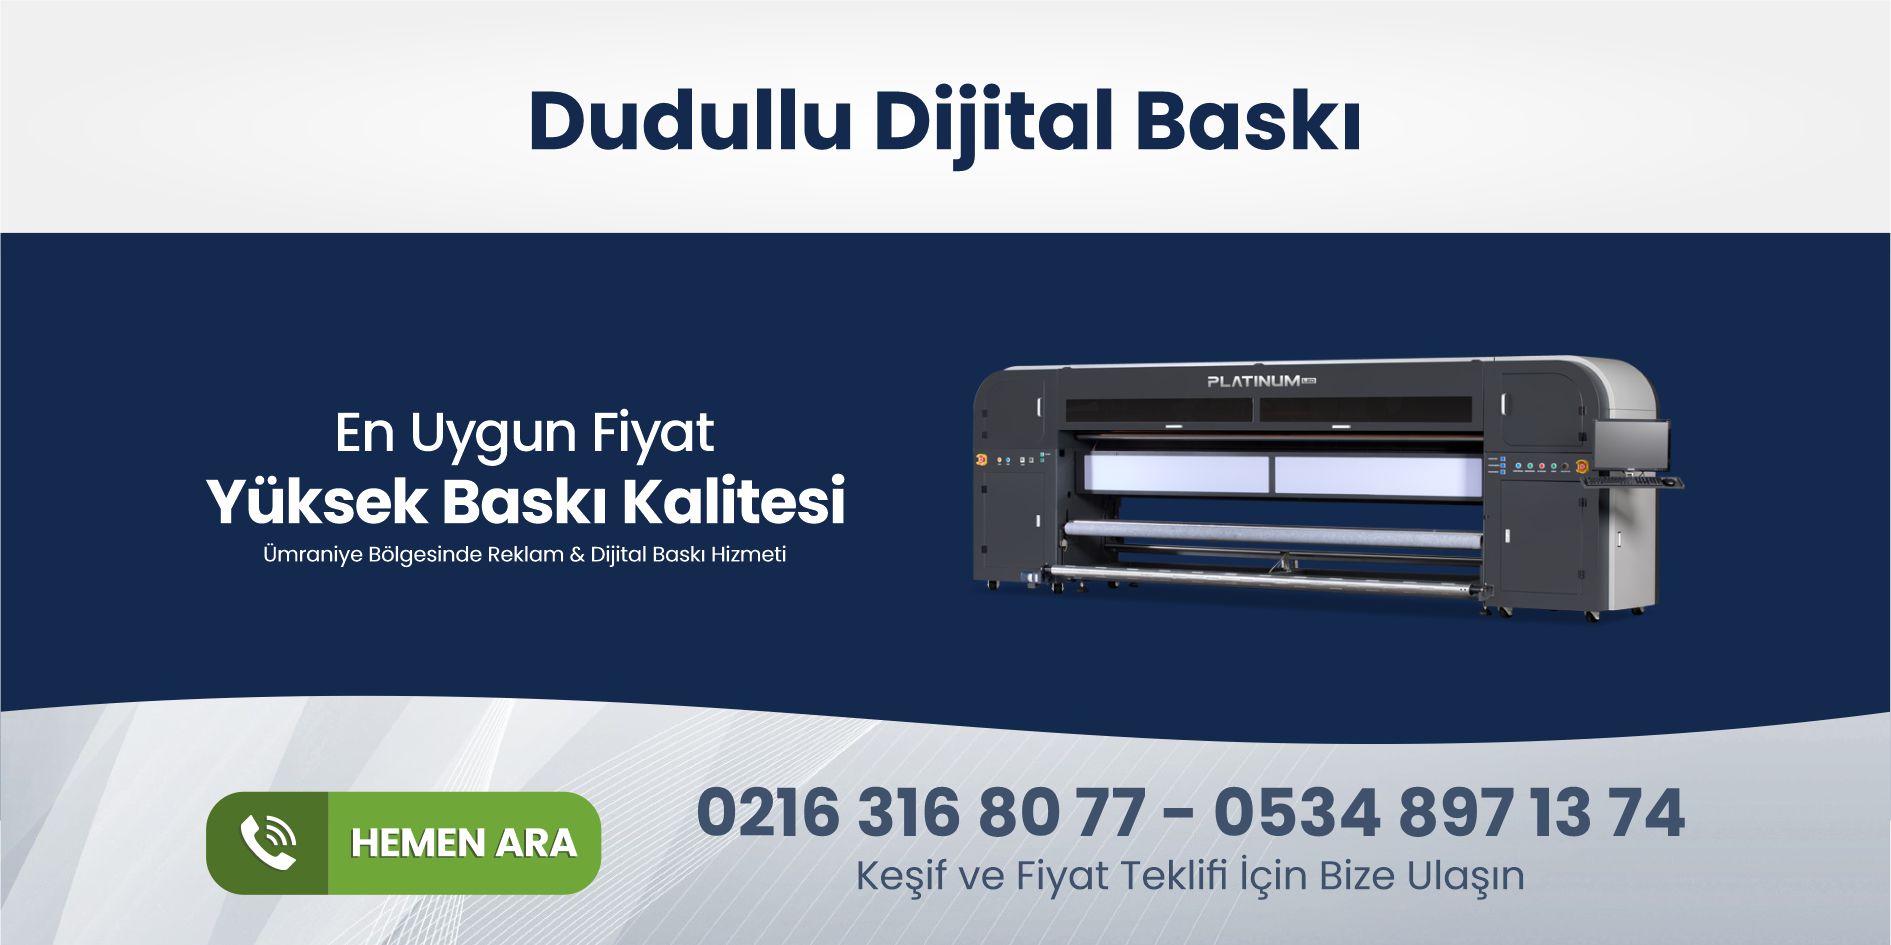 You are currently viewing Dudullu Dijital Baskı